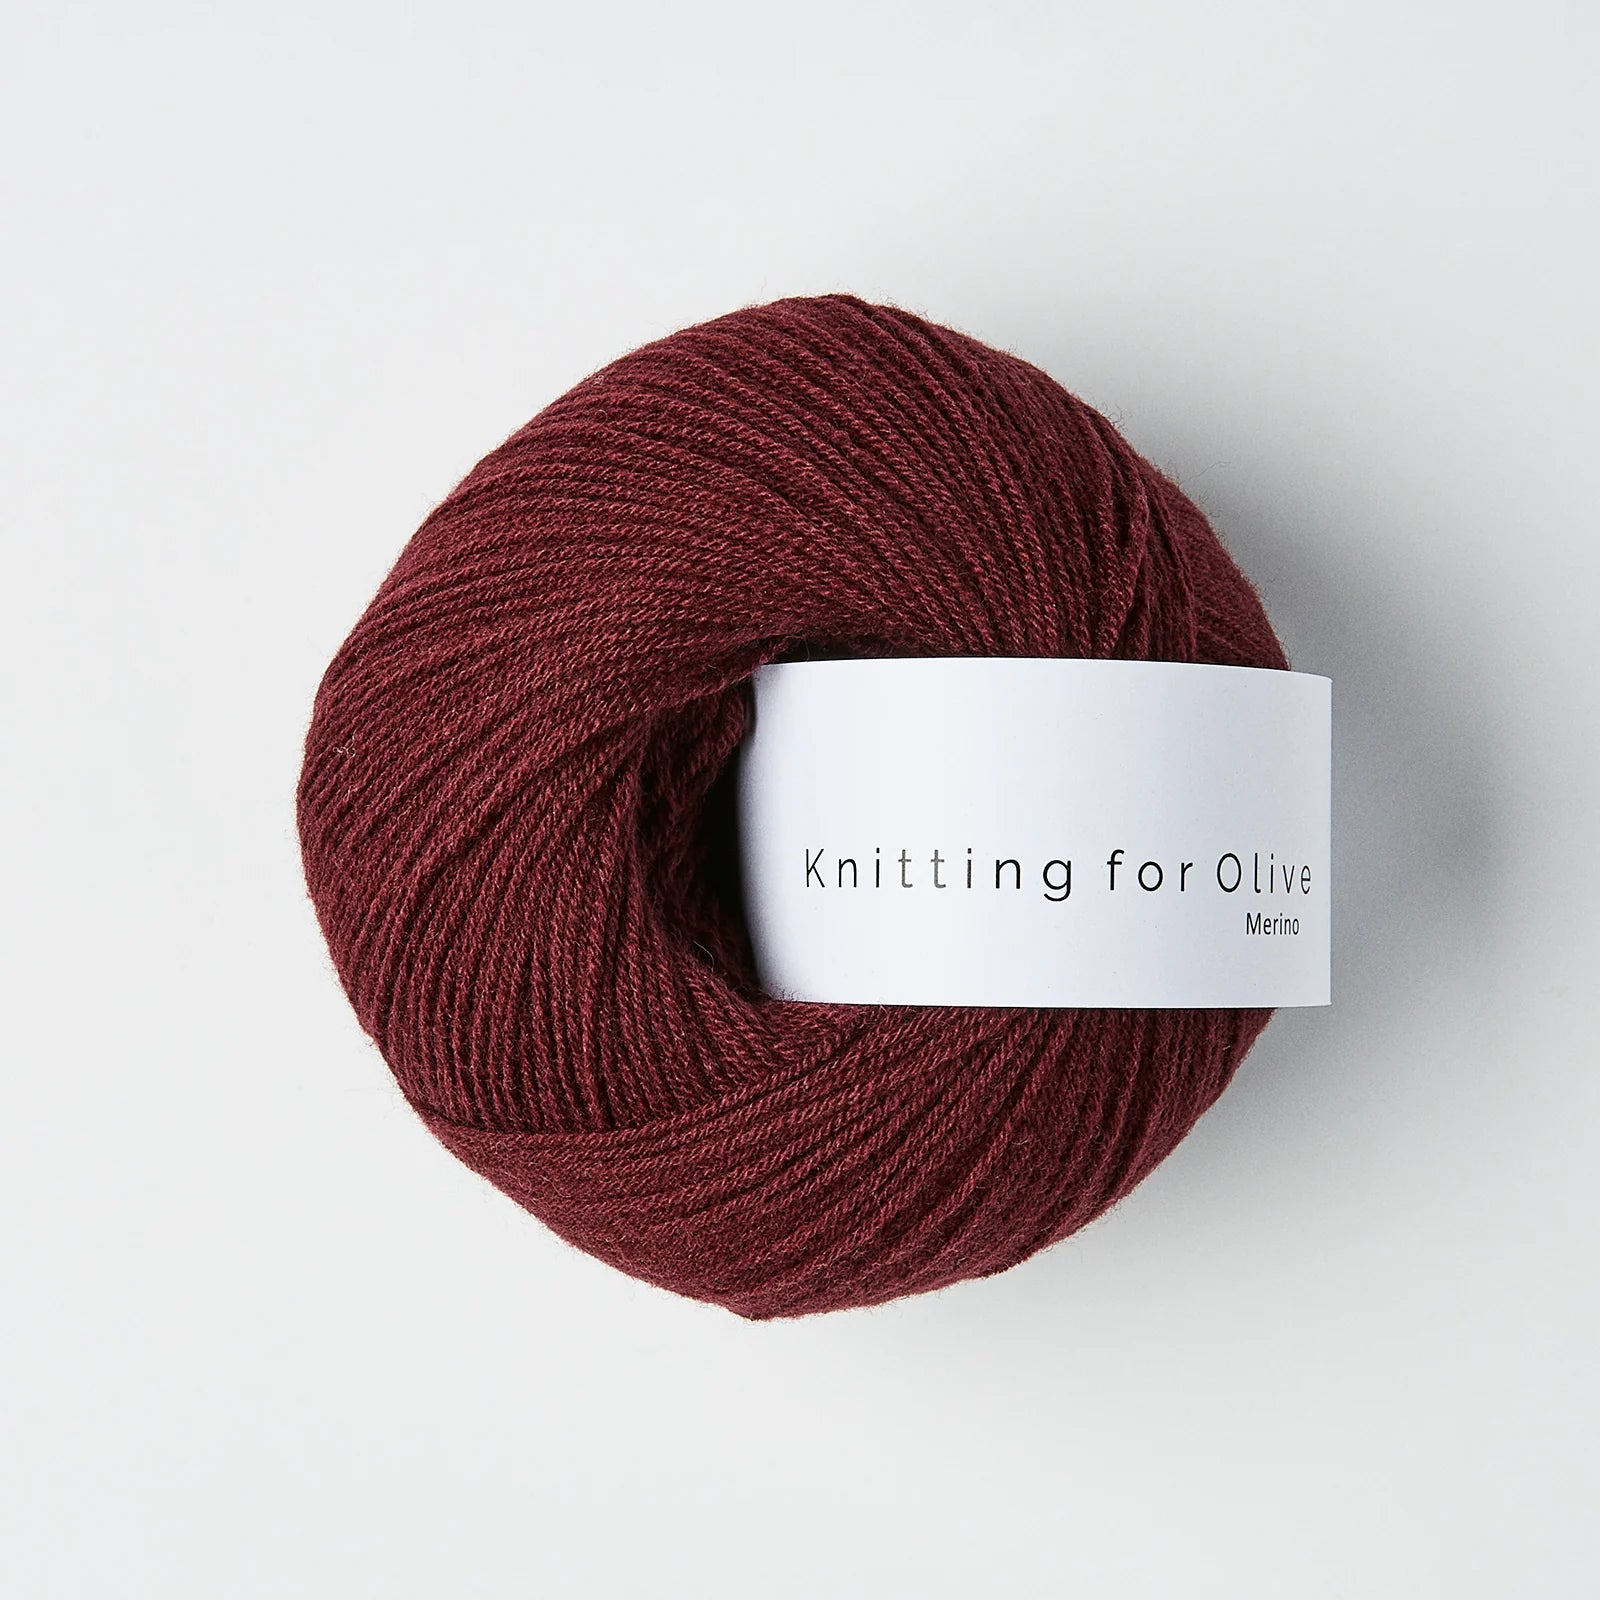 Knitting for Olive Merino - Knitting for Olive - Bordeaux - The Little Yarn Store